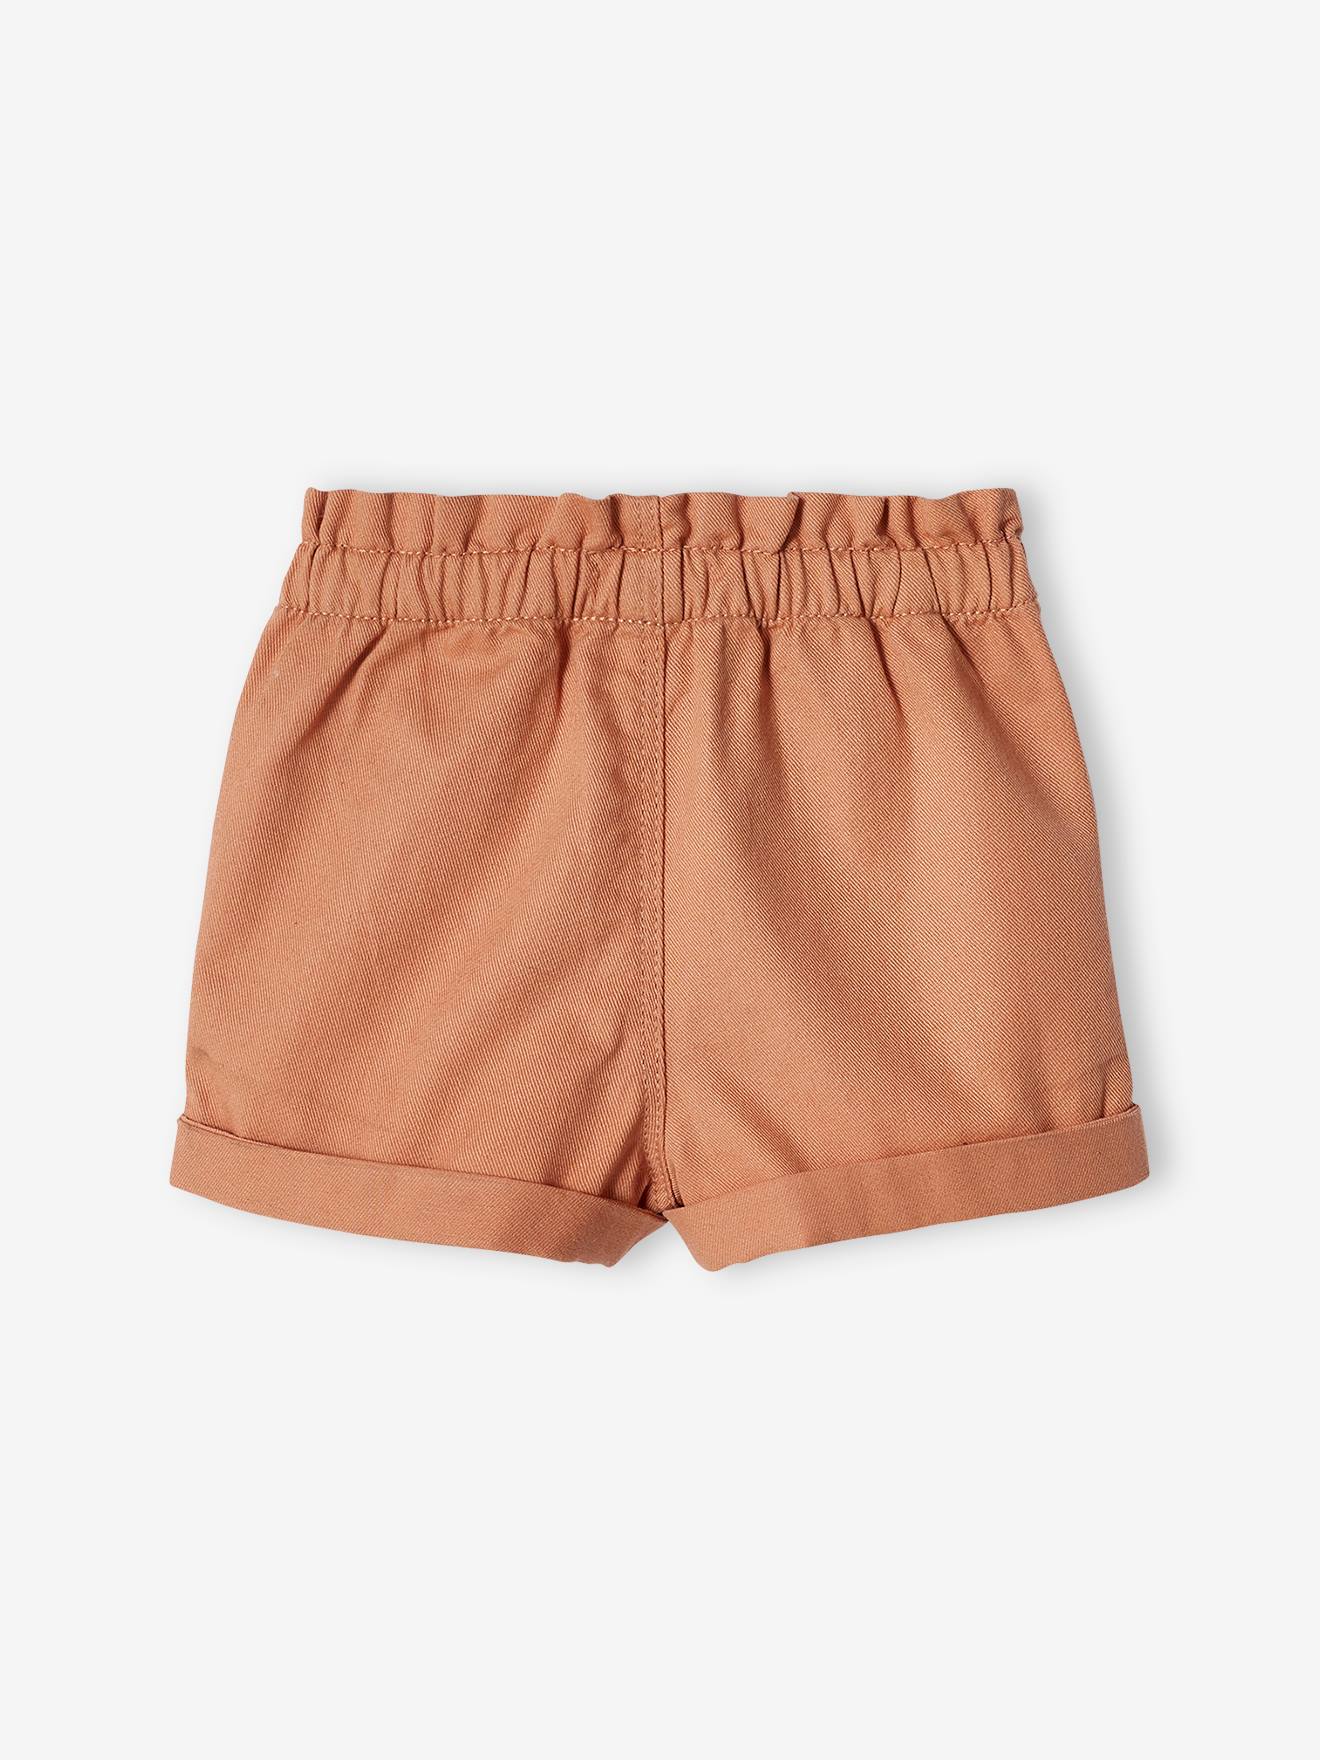 https://media.vertbaudet.com/Pictures/vertbaudet/254963/shorts-with-elasticated-waistband-for-babies.jpg